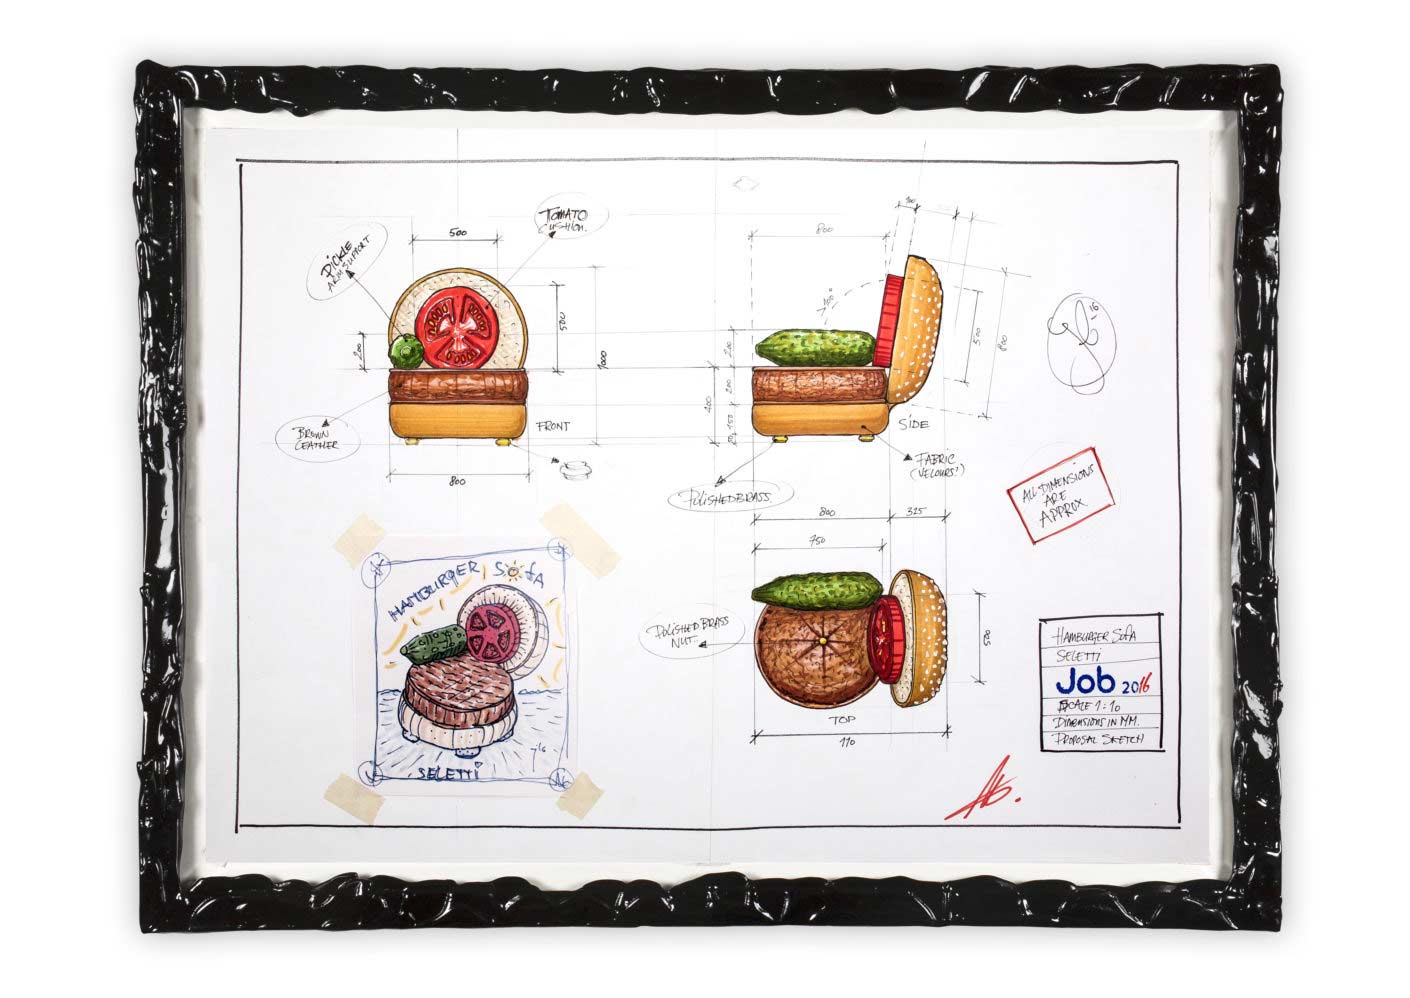 Hot Dog-Sofa und Hamburger-Sessel hot-dog-sofa-hamburger-sessel_06 